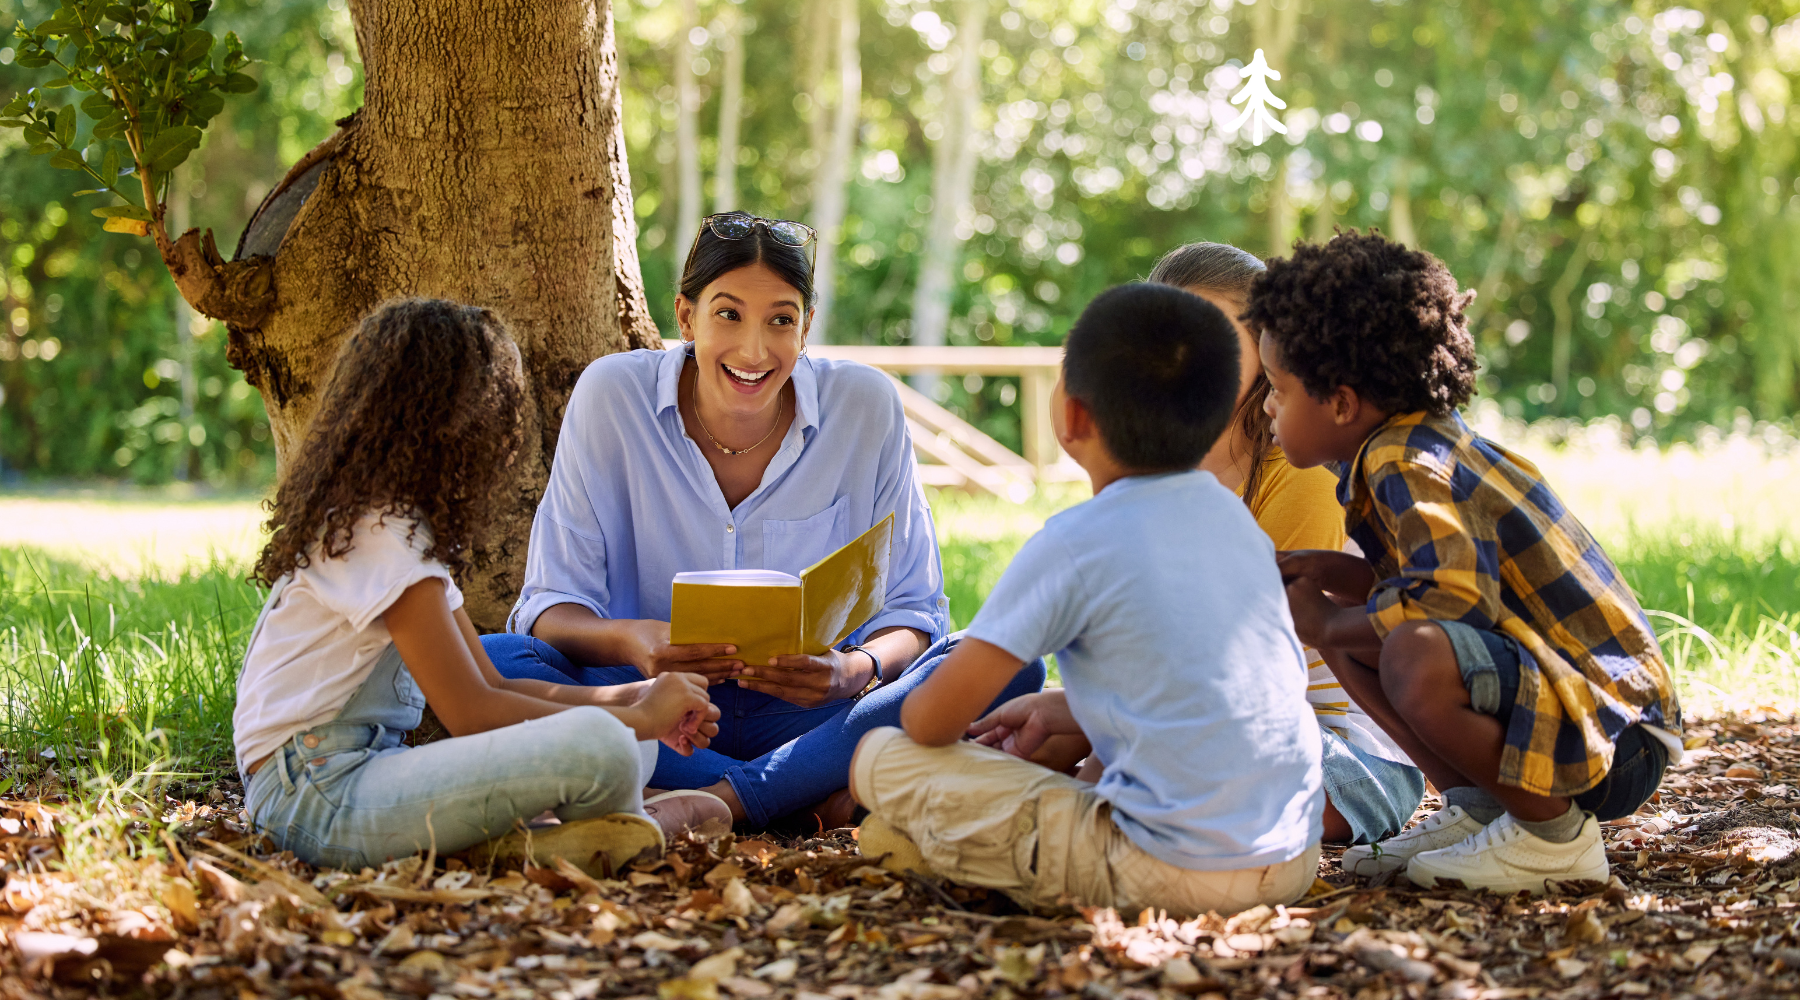 Teachers Corner: Incorporating the Outdoors in K-6 Curriculum